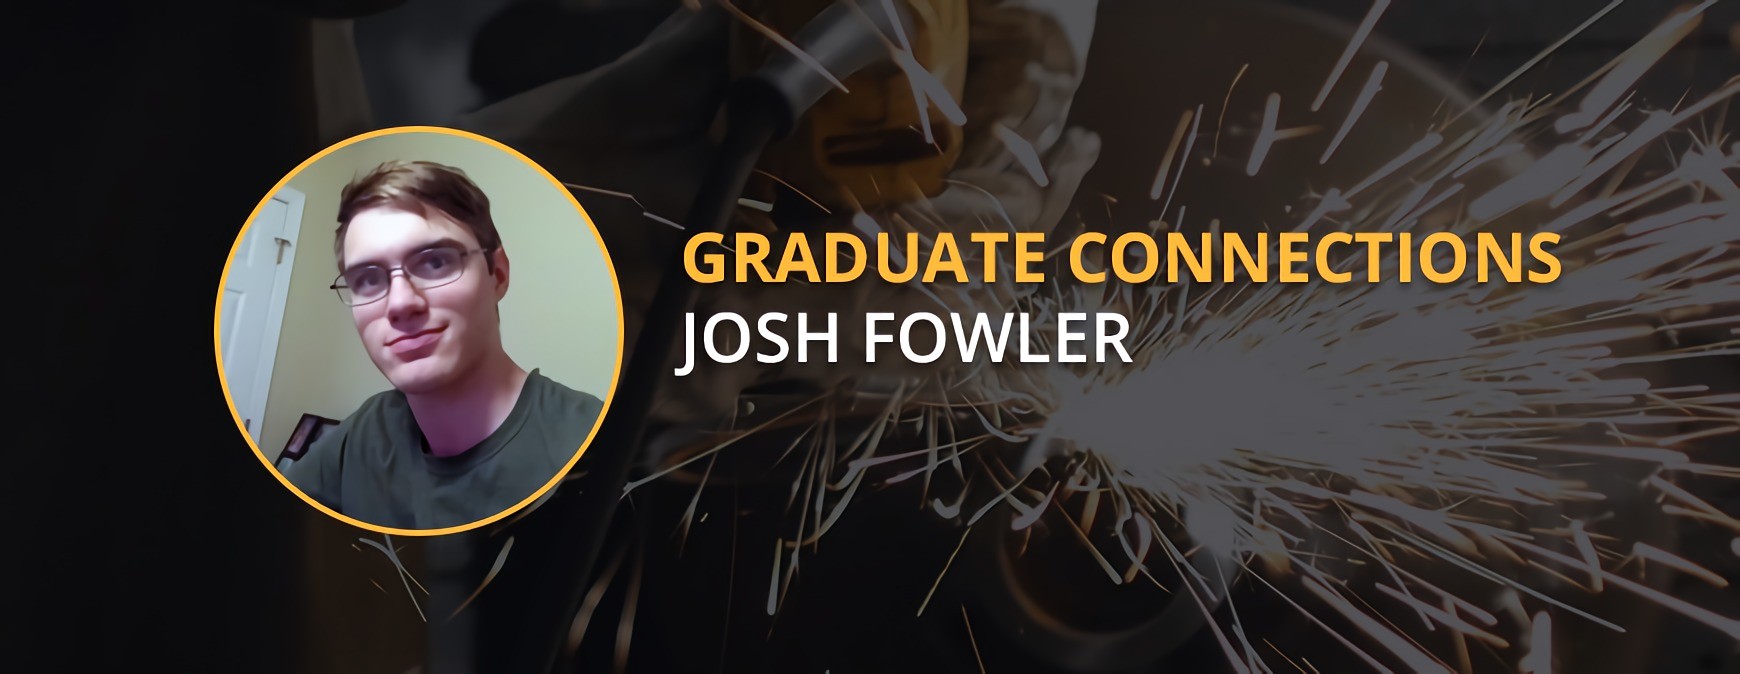 Josh Fowler Graduate Connection